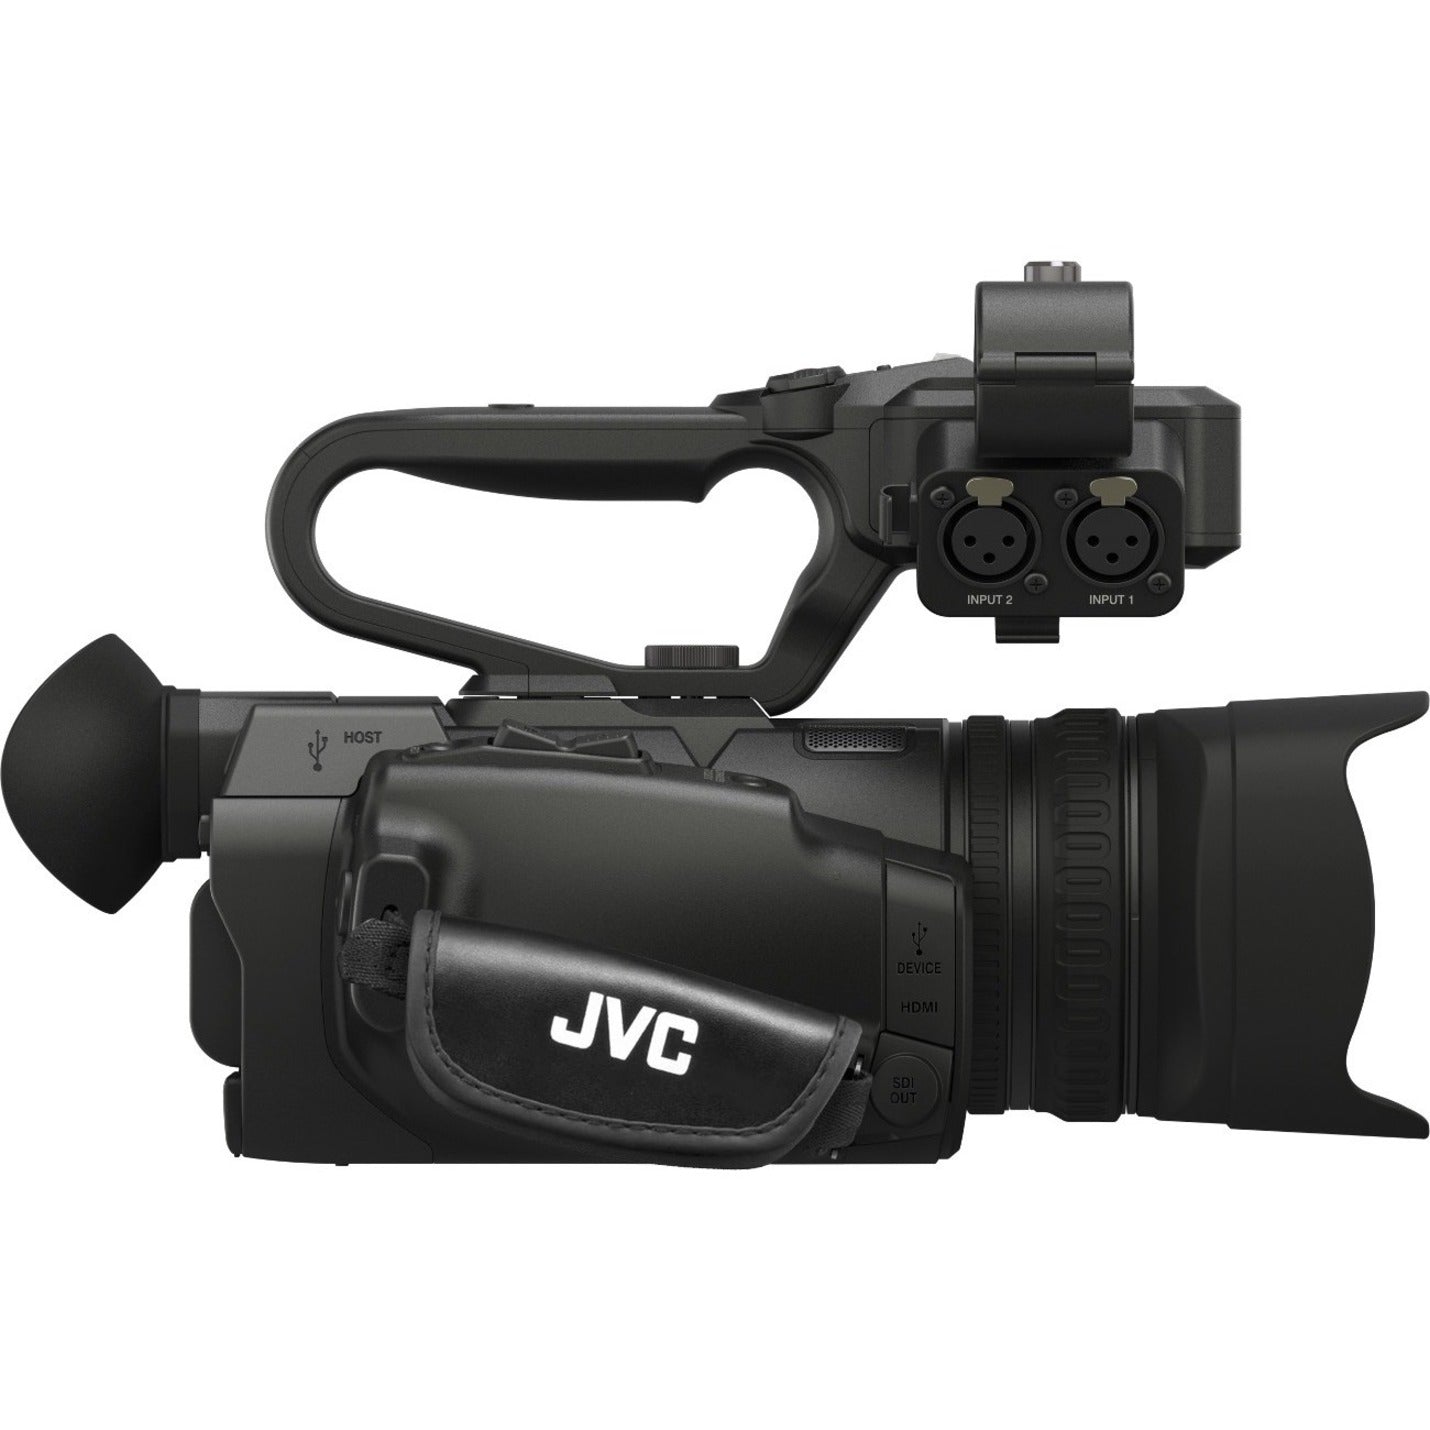 JVC GY-HM180U 4KCAM Compact Handheld Camcorder w/Integrated 12x Lens, 3.5" LCD Screen, 1/2.3" CMOS, 4K